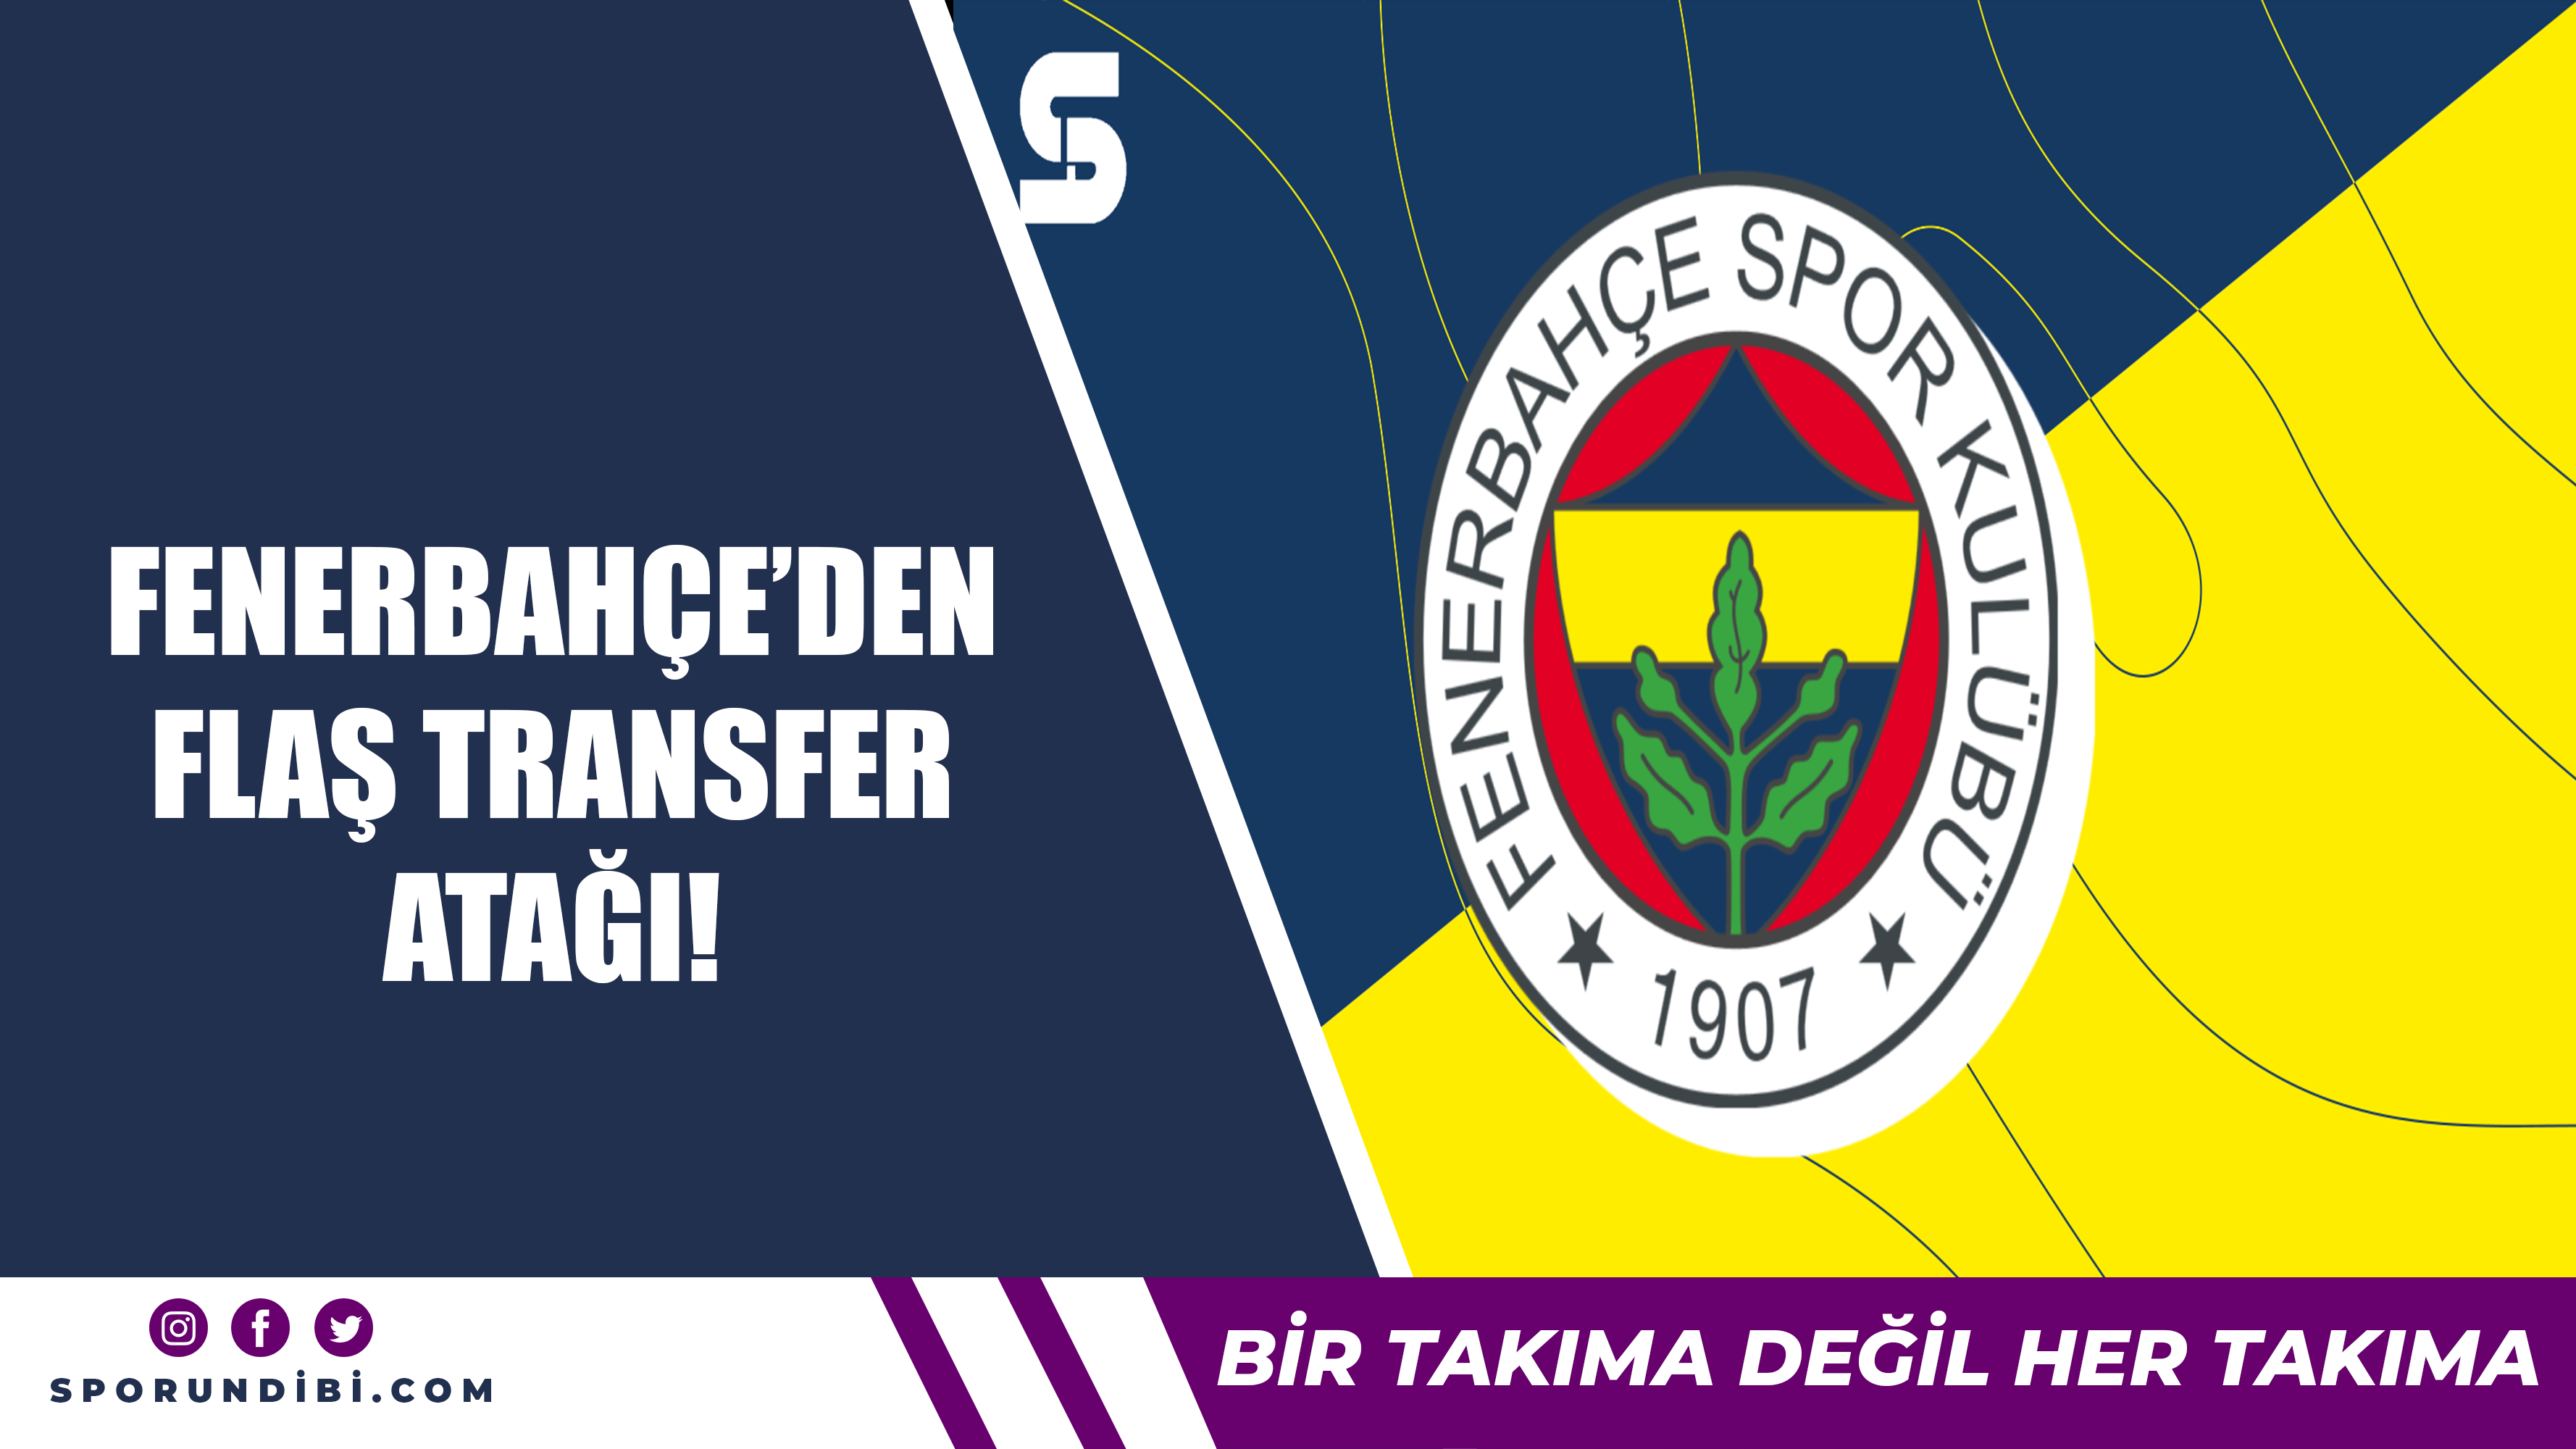 Fenerbahçe'den flaş transfer atağı!